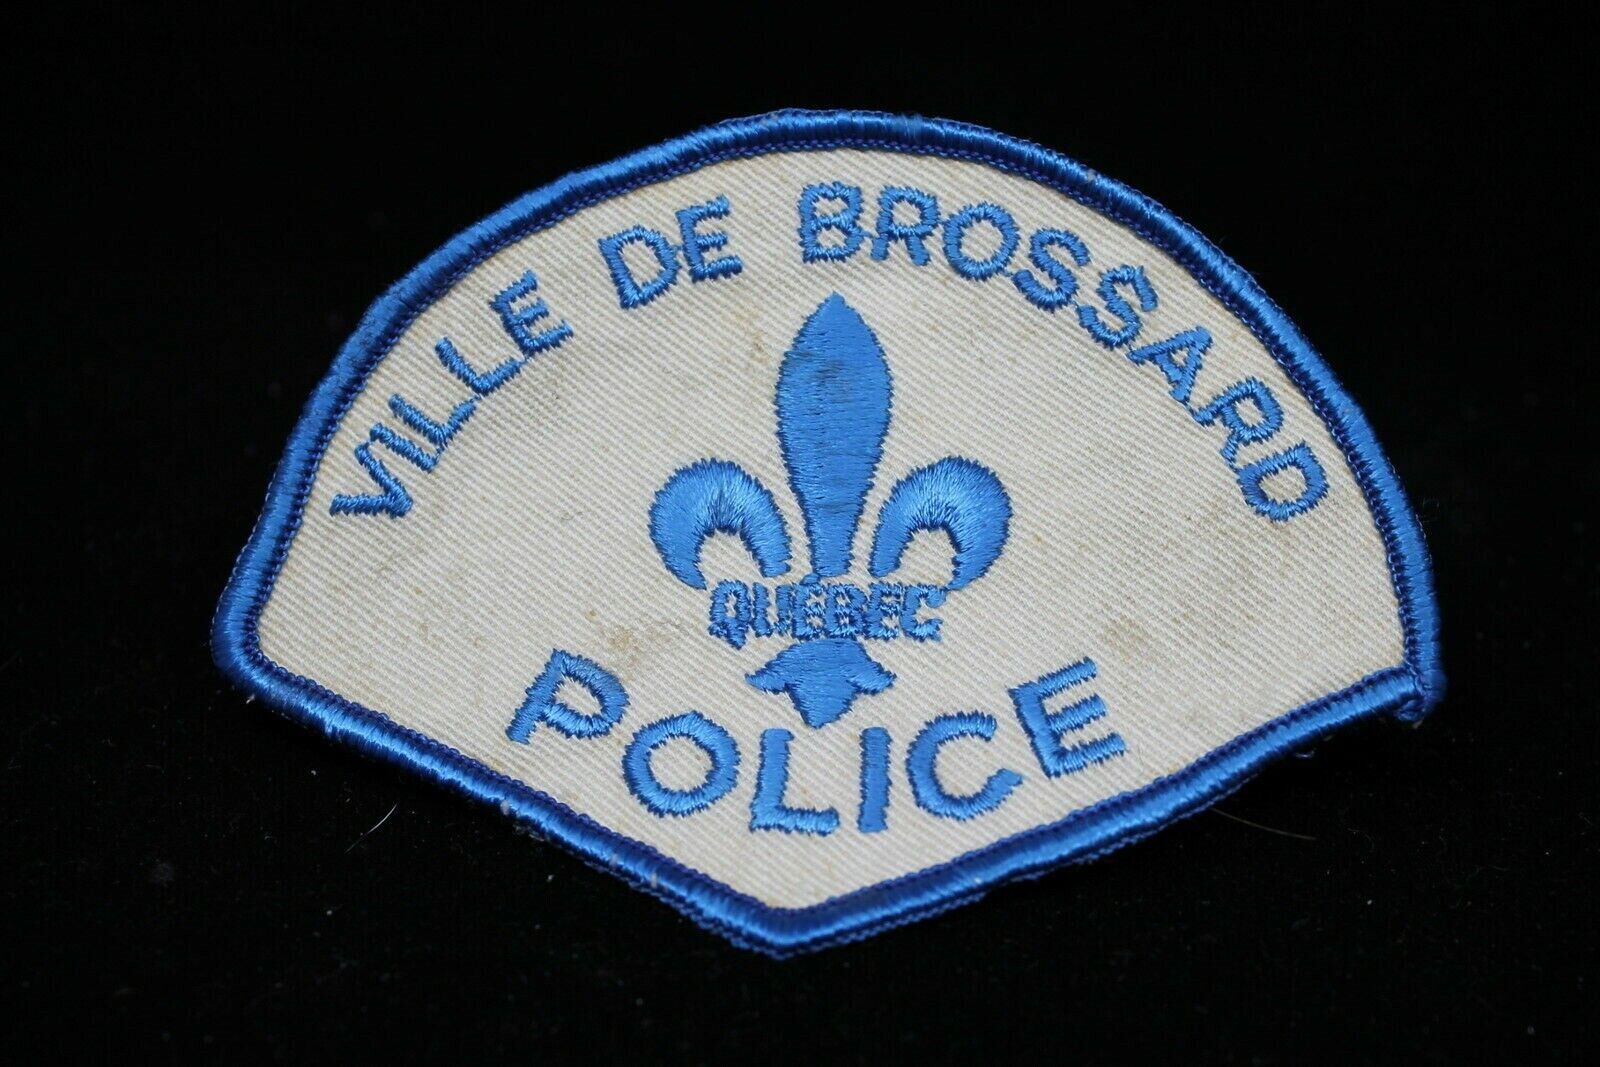 Canadian Brossard Police Patch